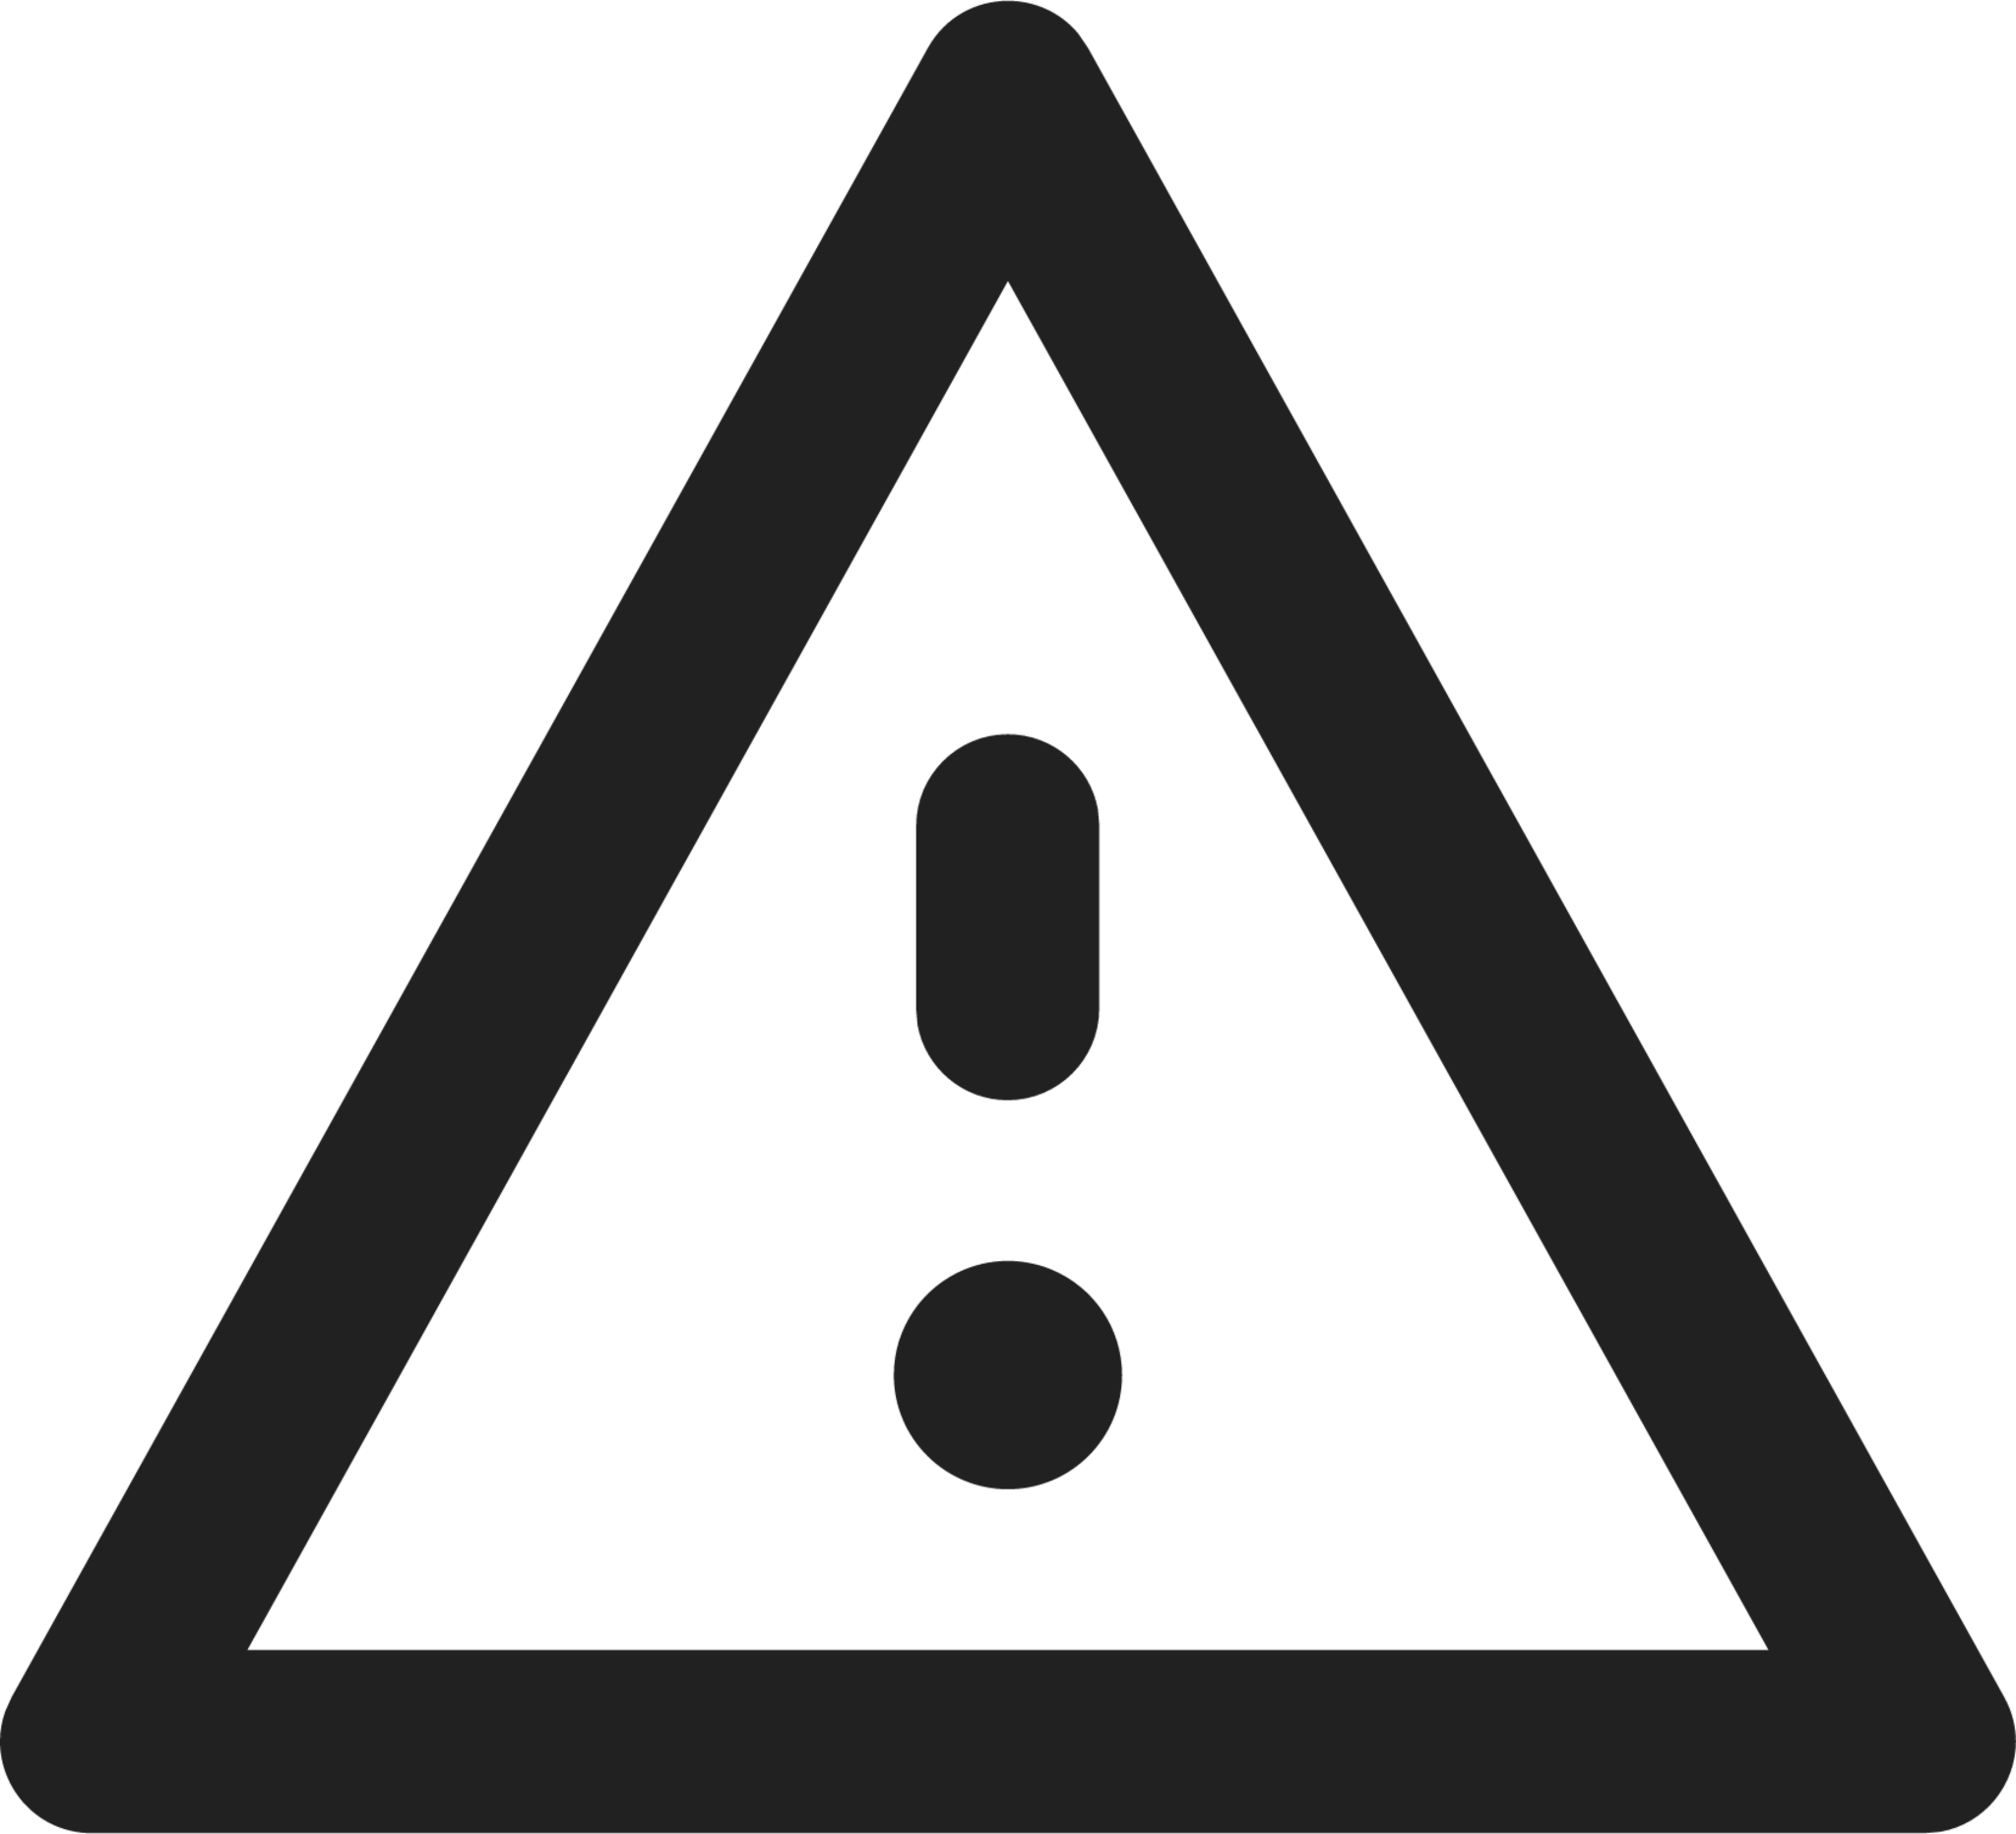 Warning icon